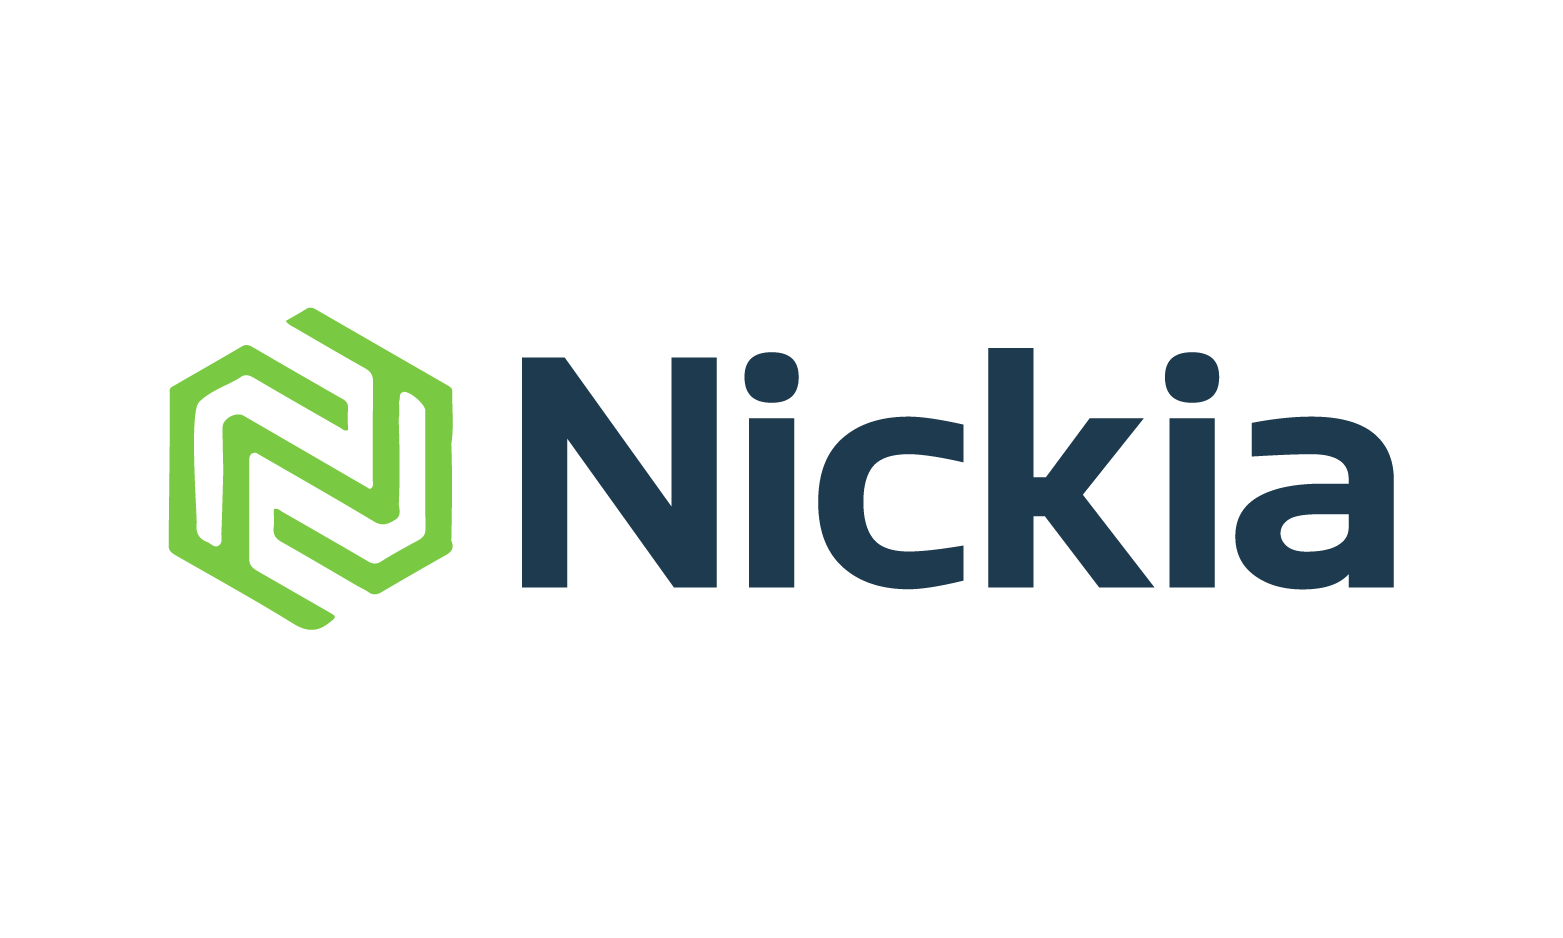 Nickia.com - Creative brandable domain for sale